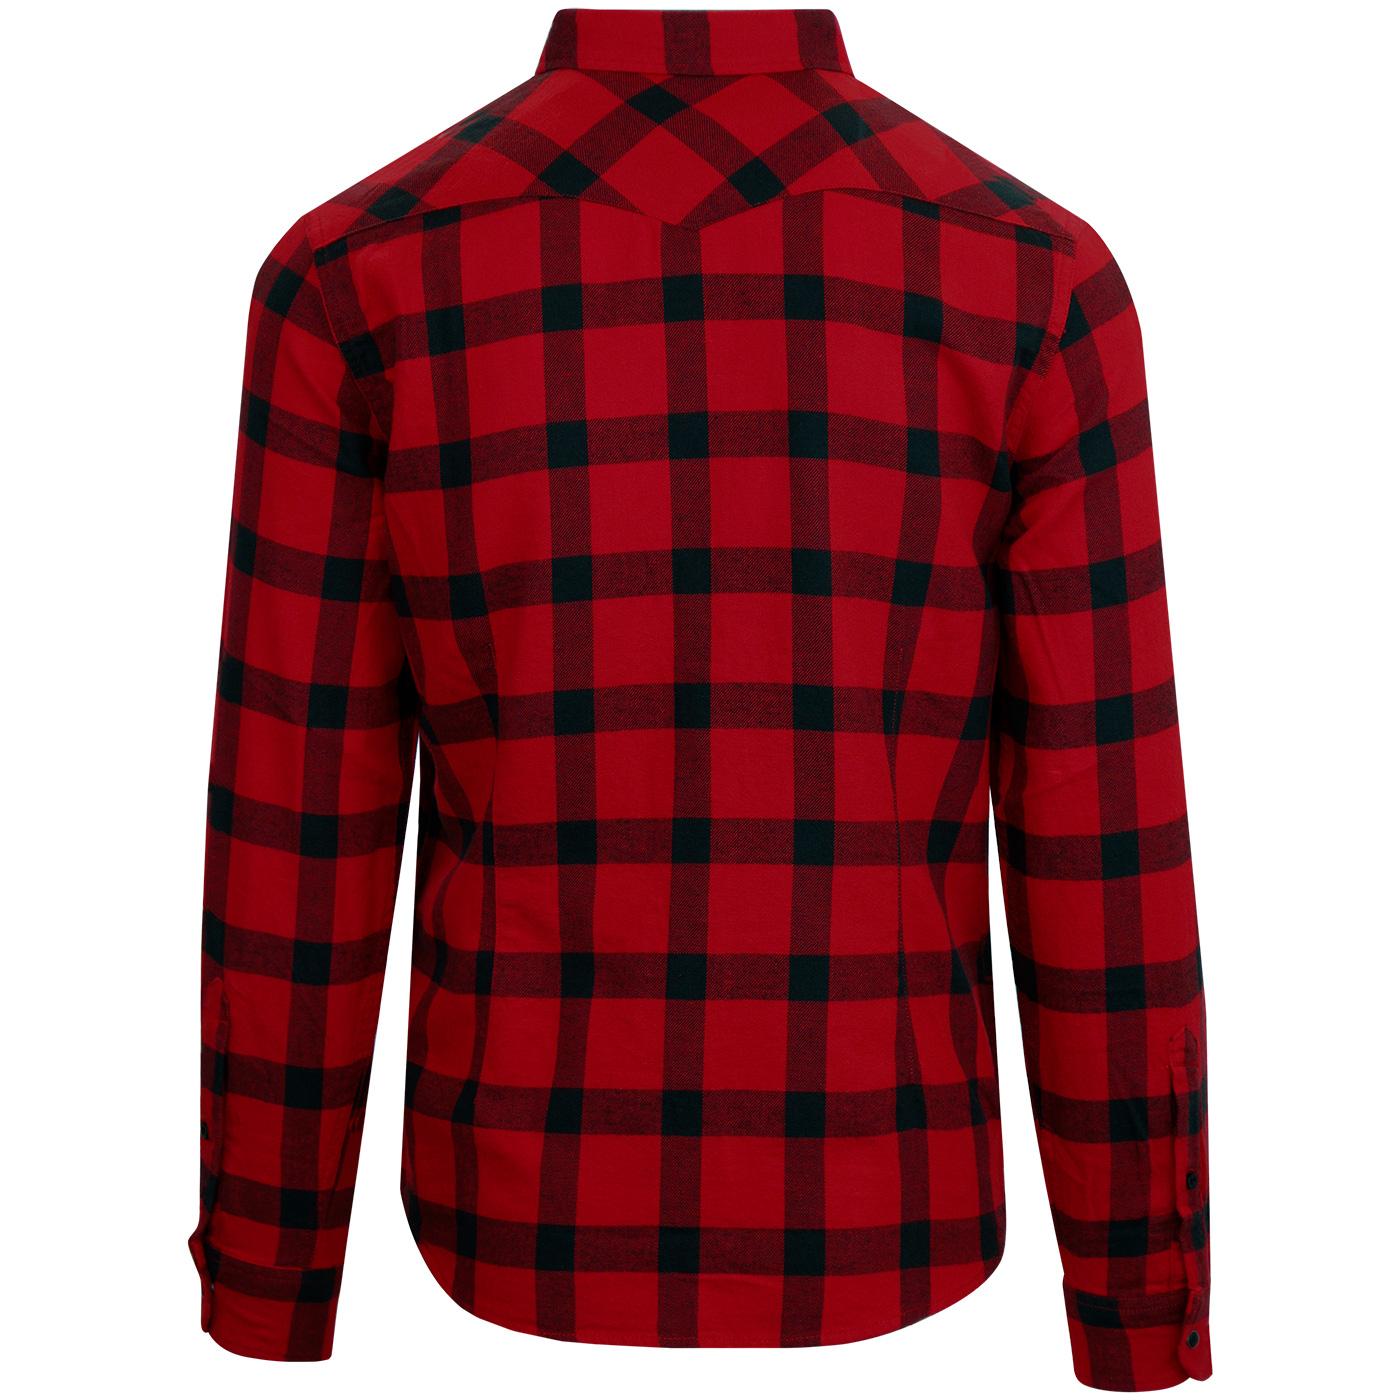 LEE Mens Long Sleeve Cotton Shirt Western Check Slim Fit Bright Red S M L XL XXL 